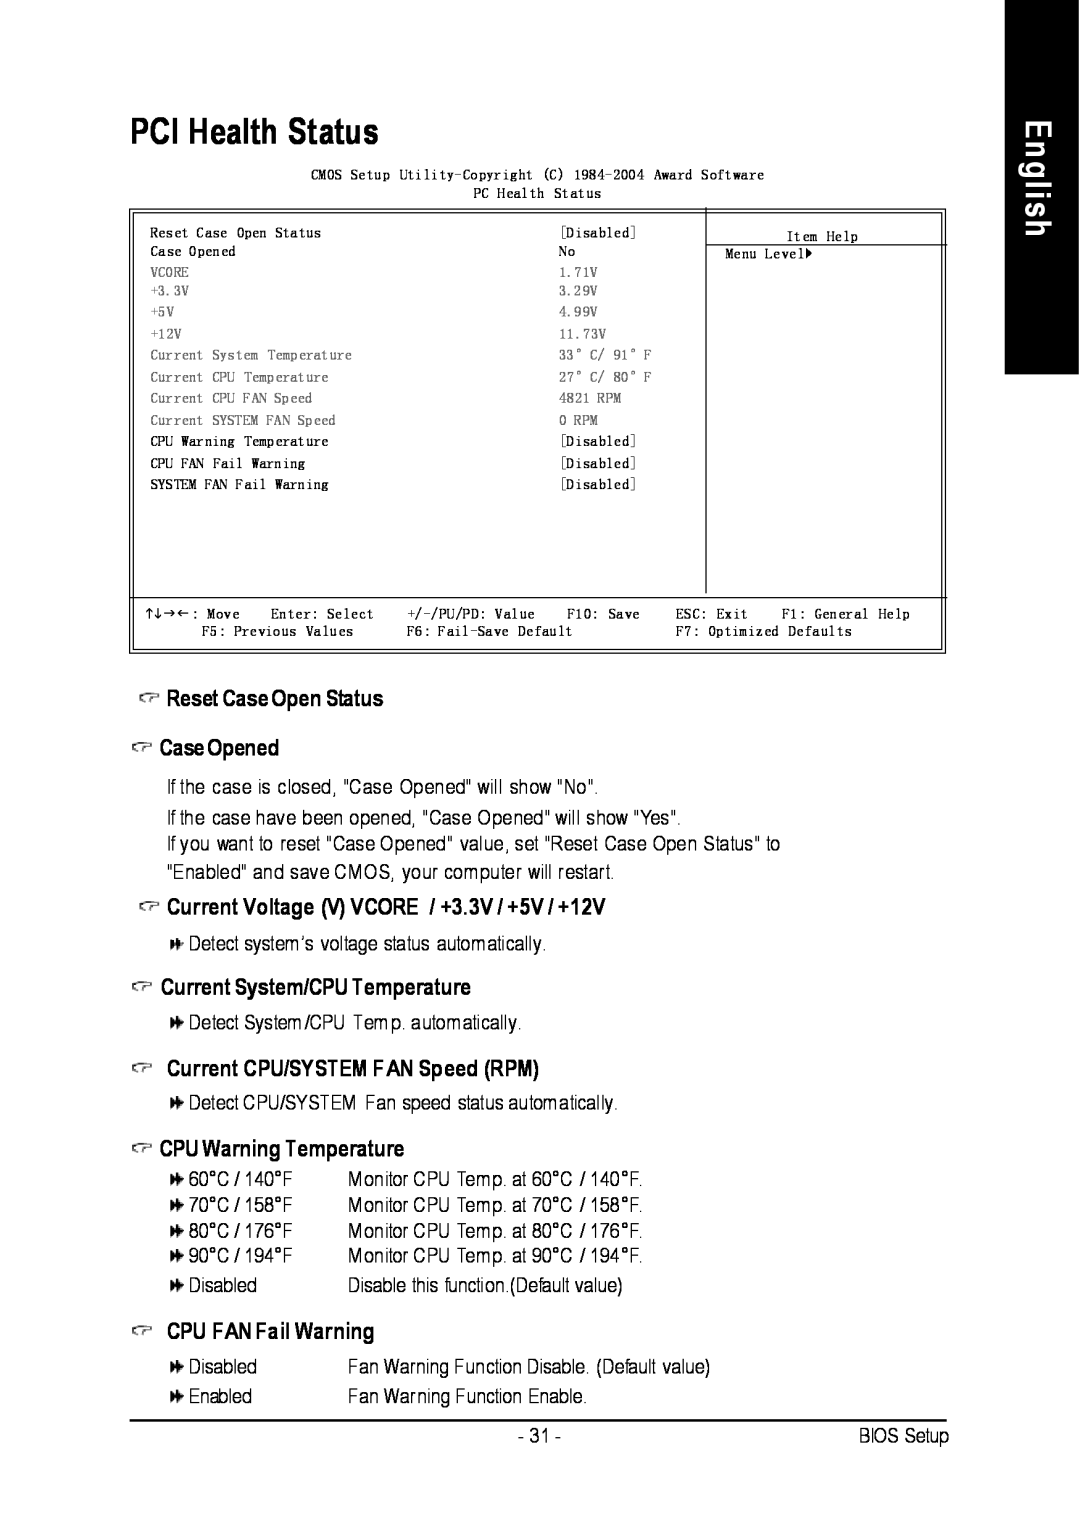 Intel 8S651M-RZ user manual PCI Health Status, English, Reset Case Open Status Case Opened, Current System/CPU Temperature 